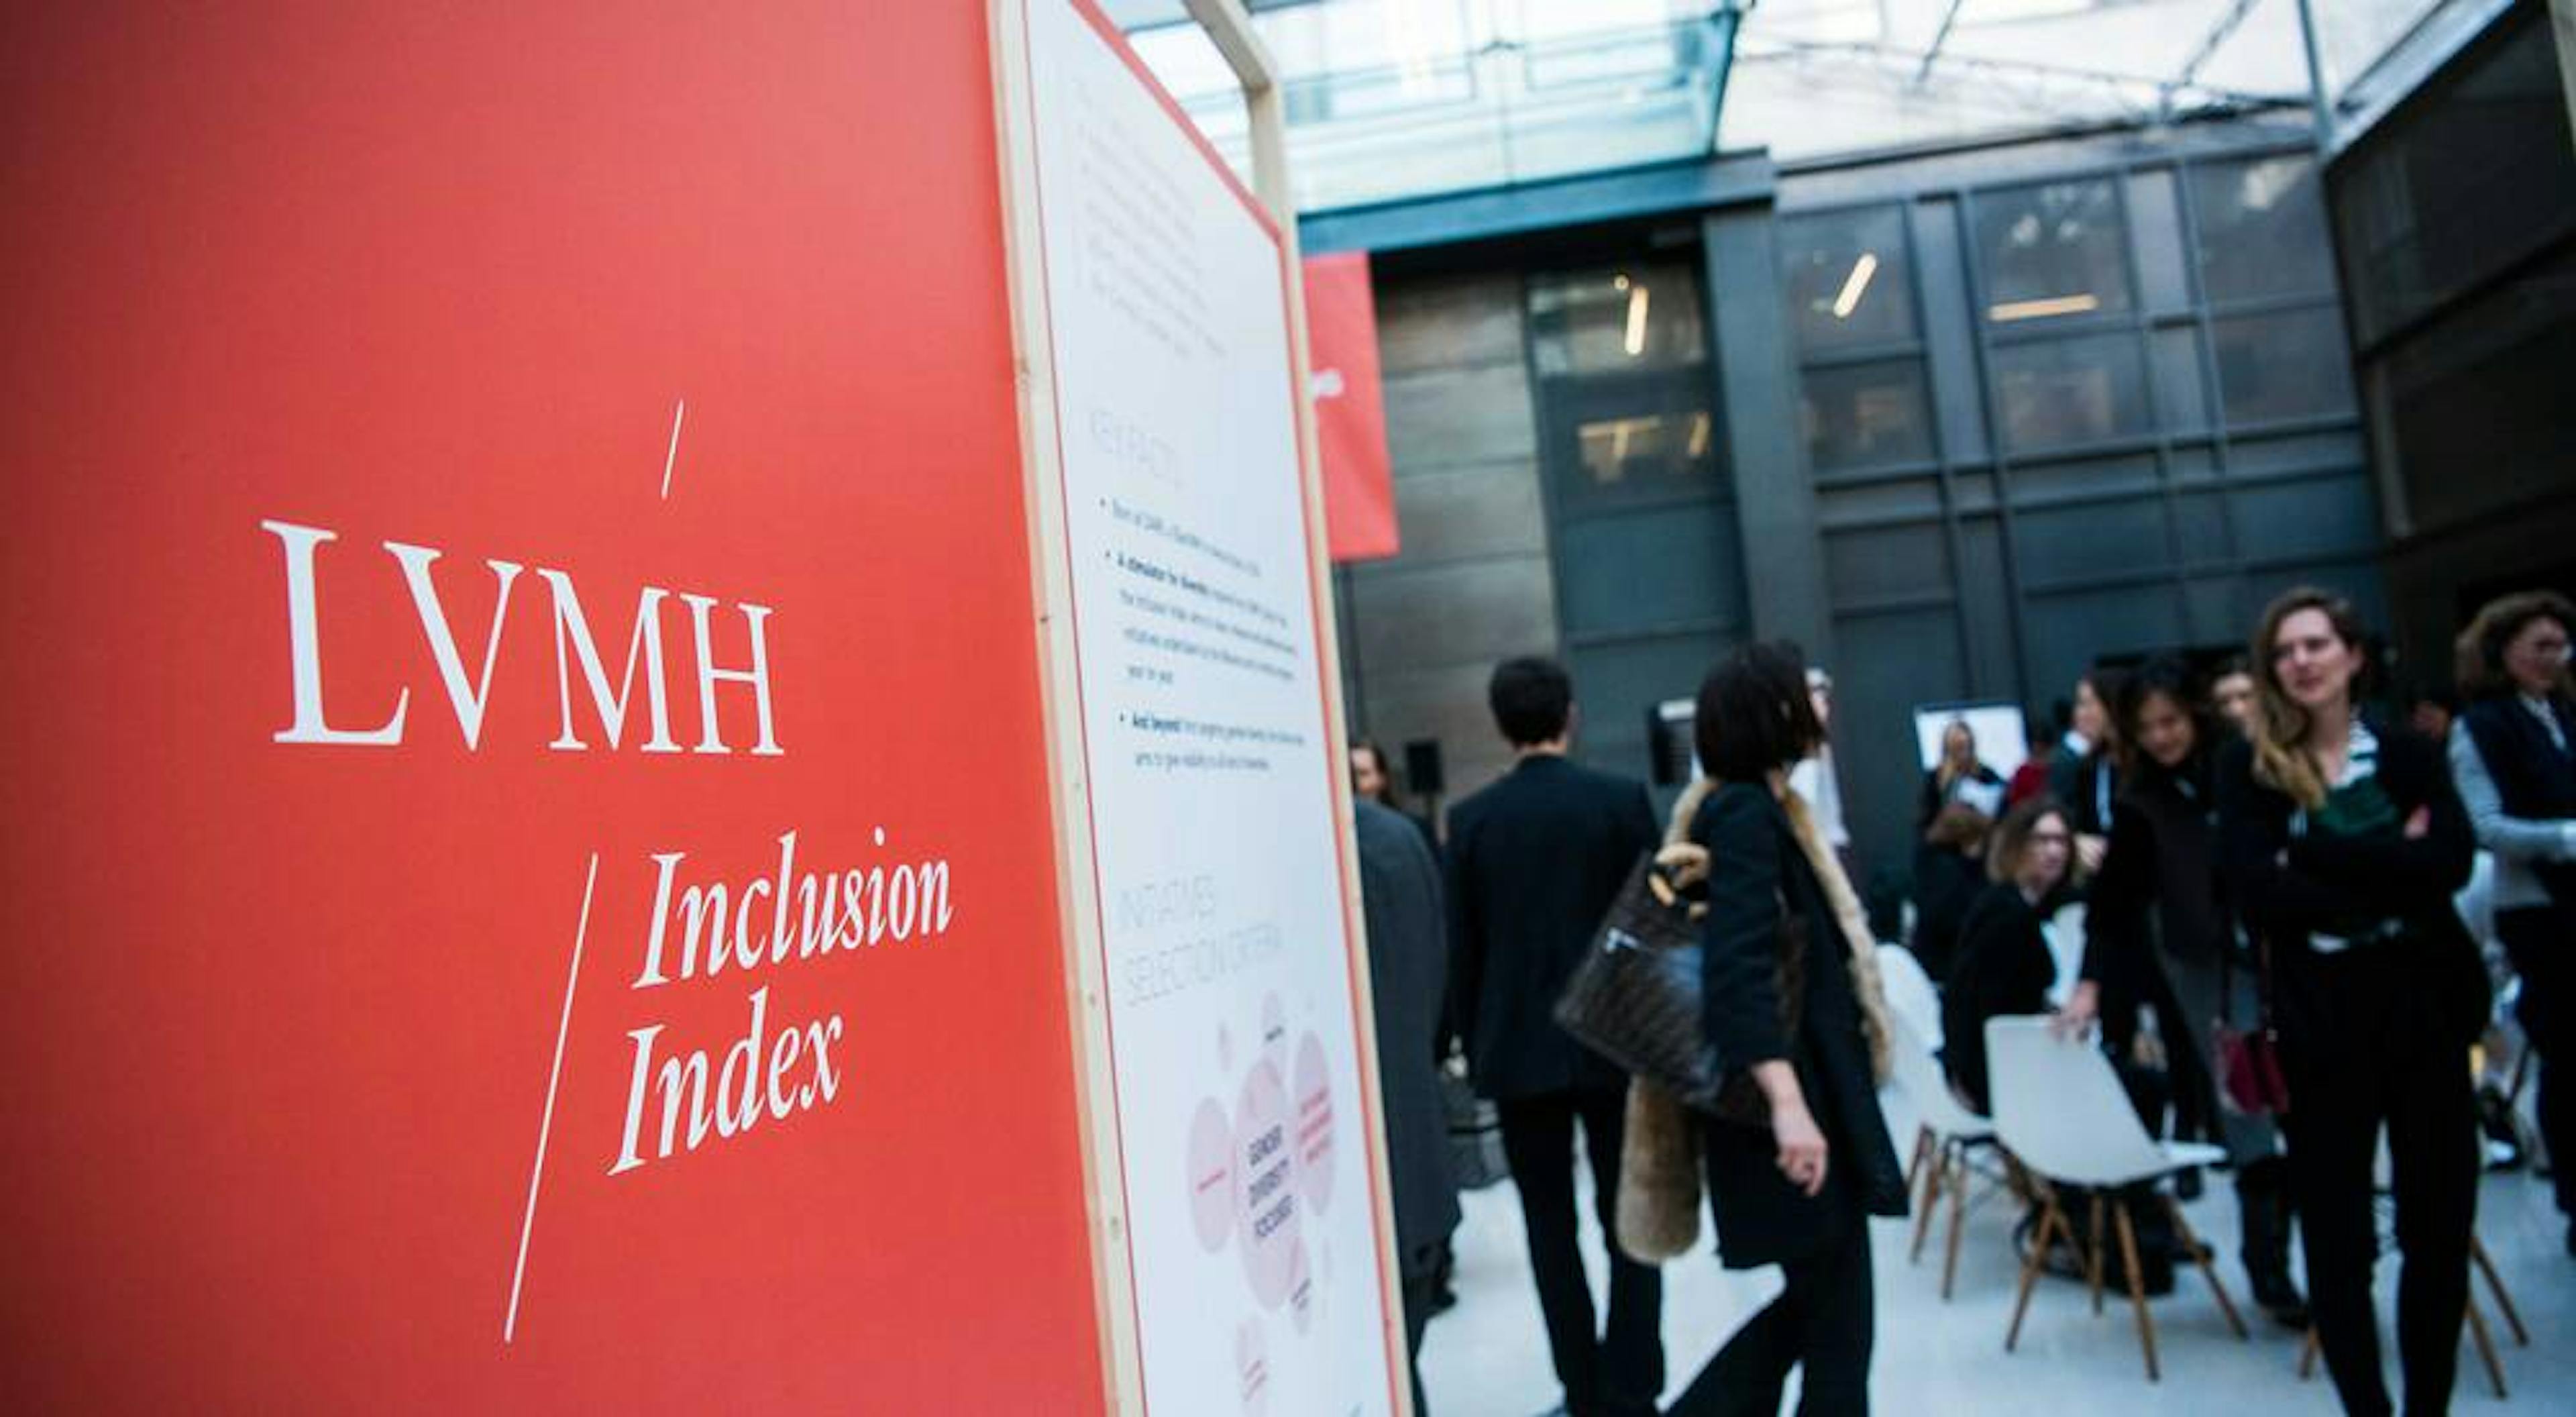 LVMH Inclusion Index logo